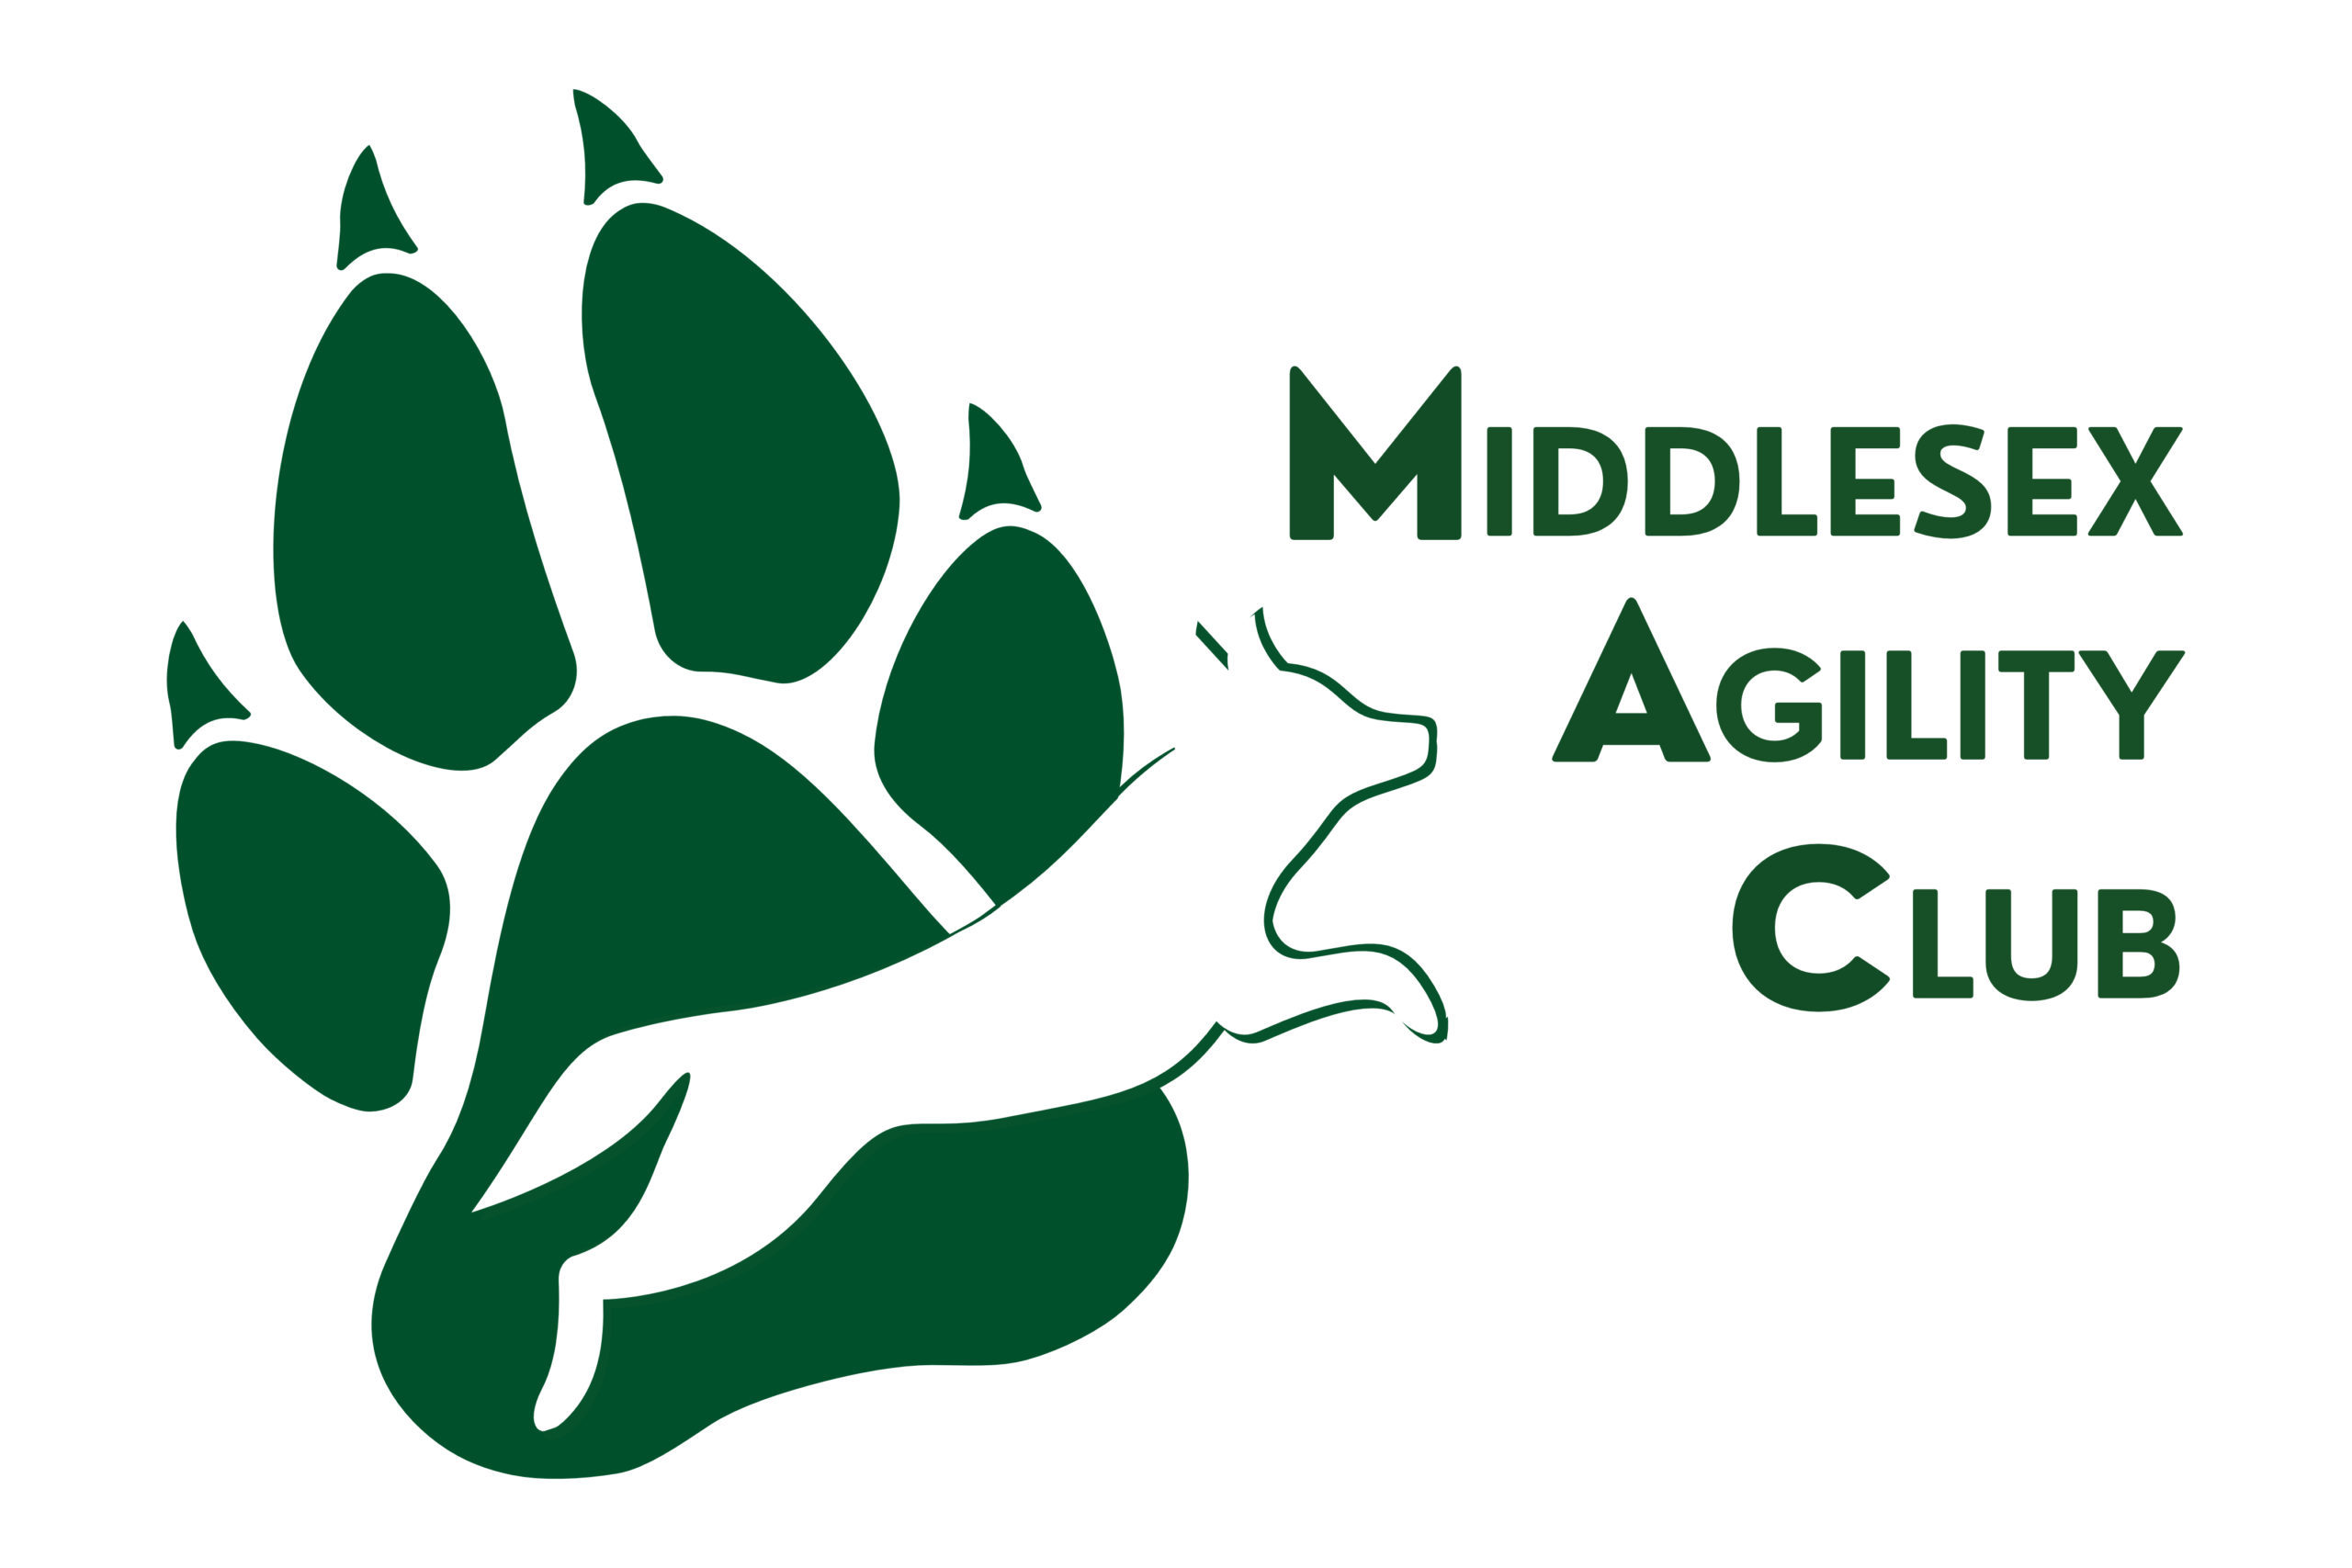 Middlesex Agility Club